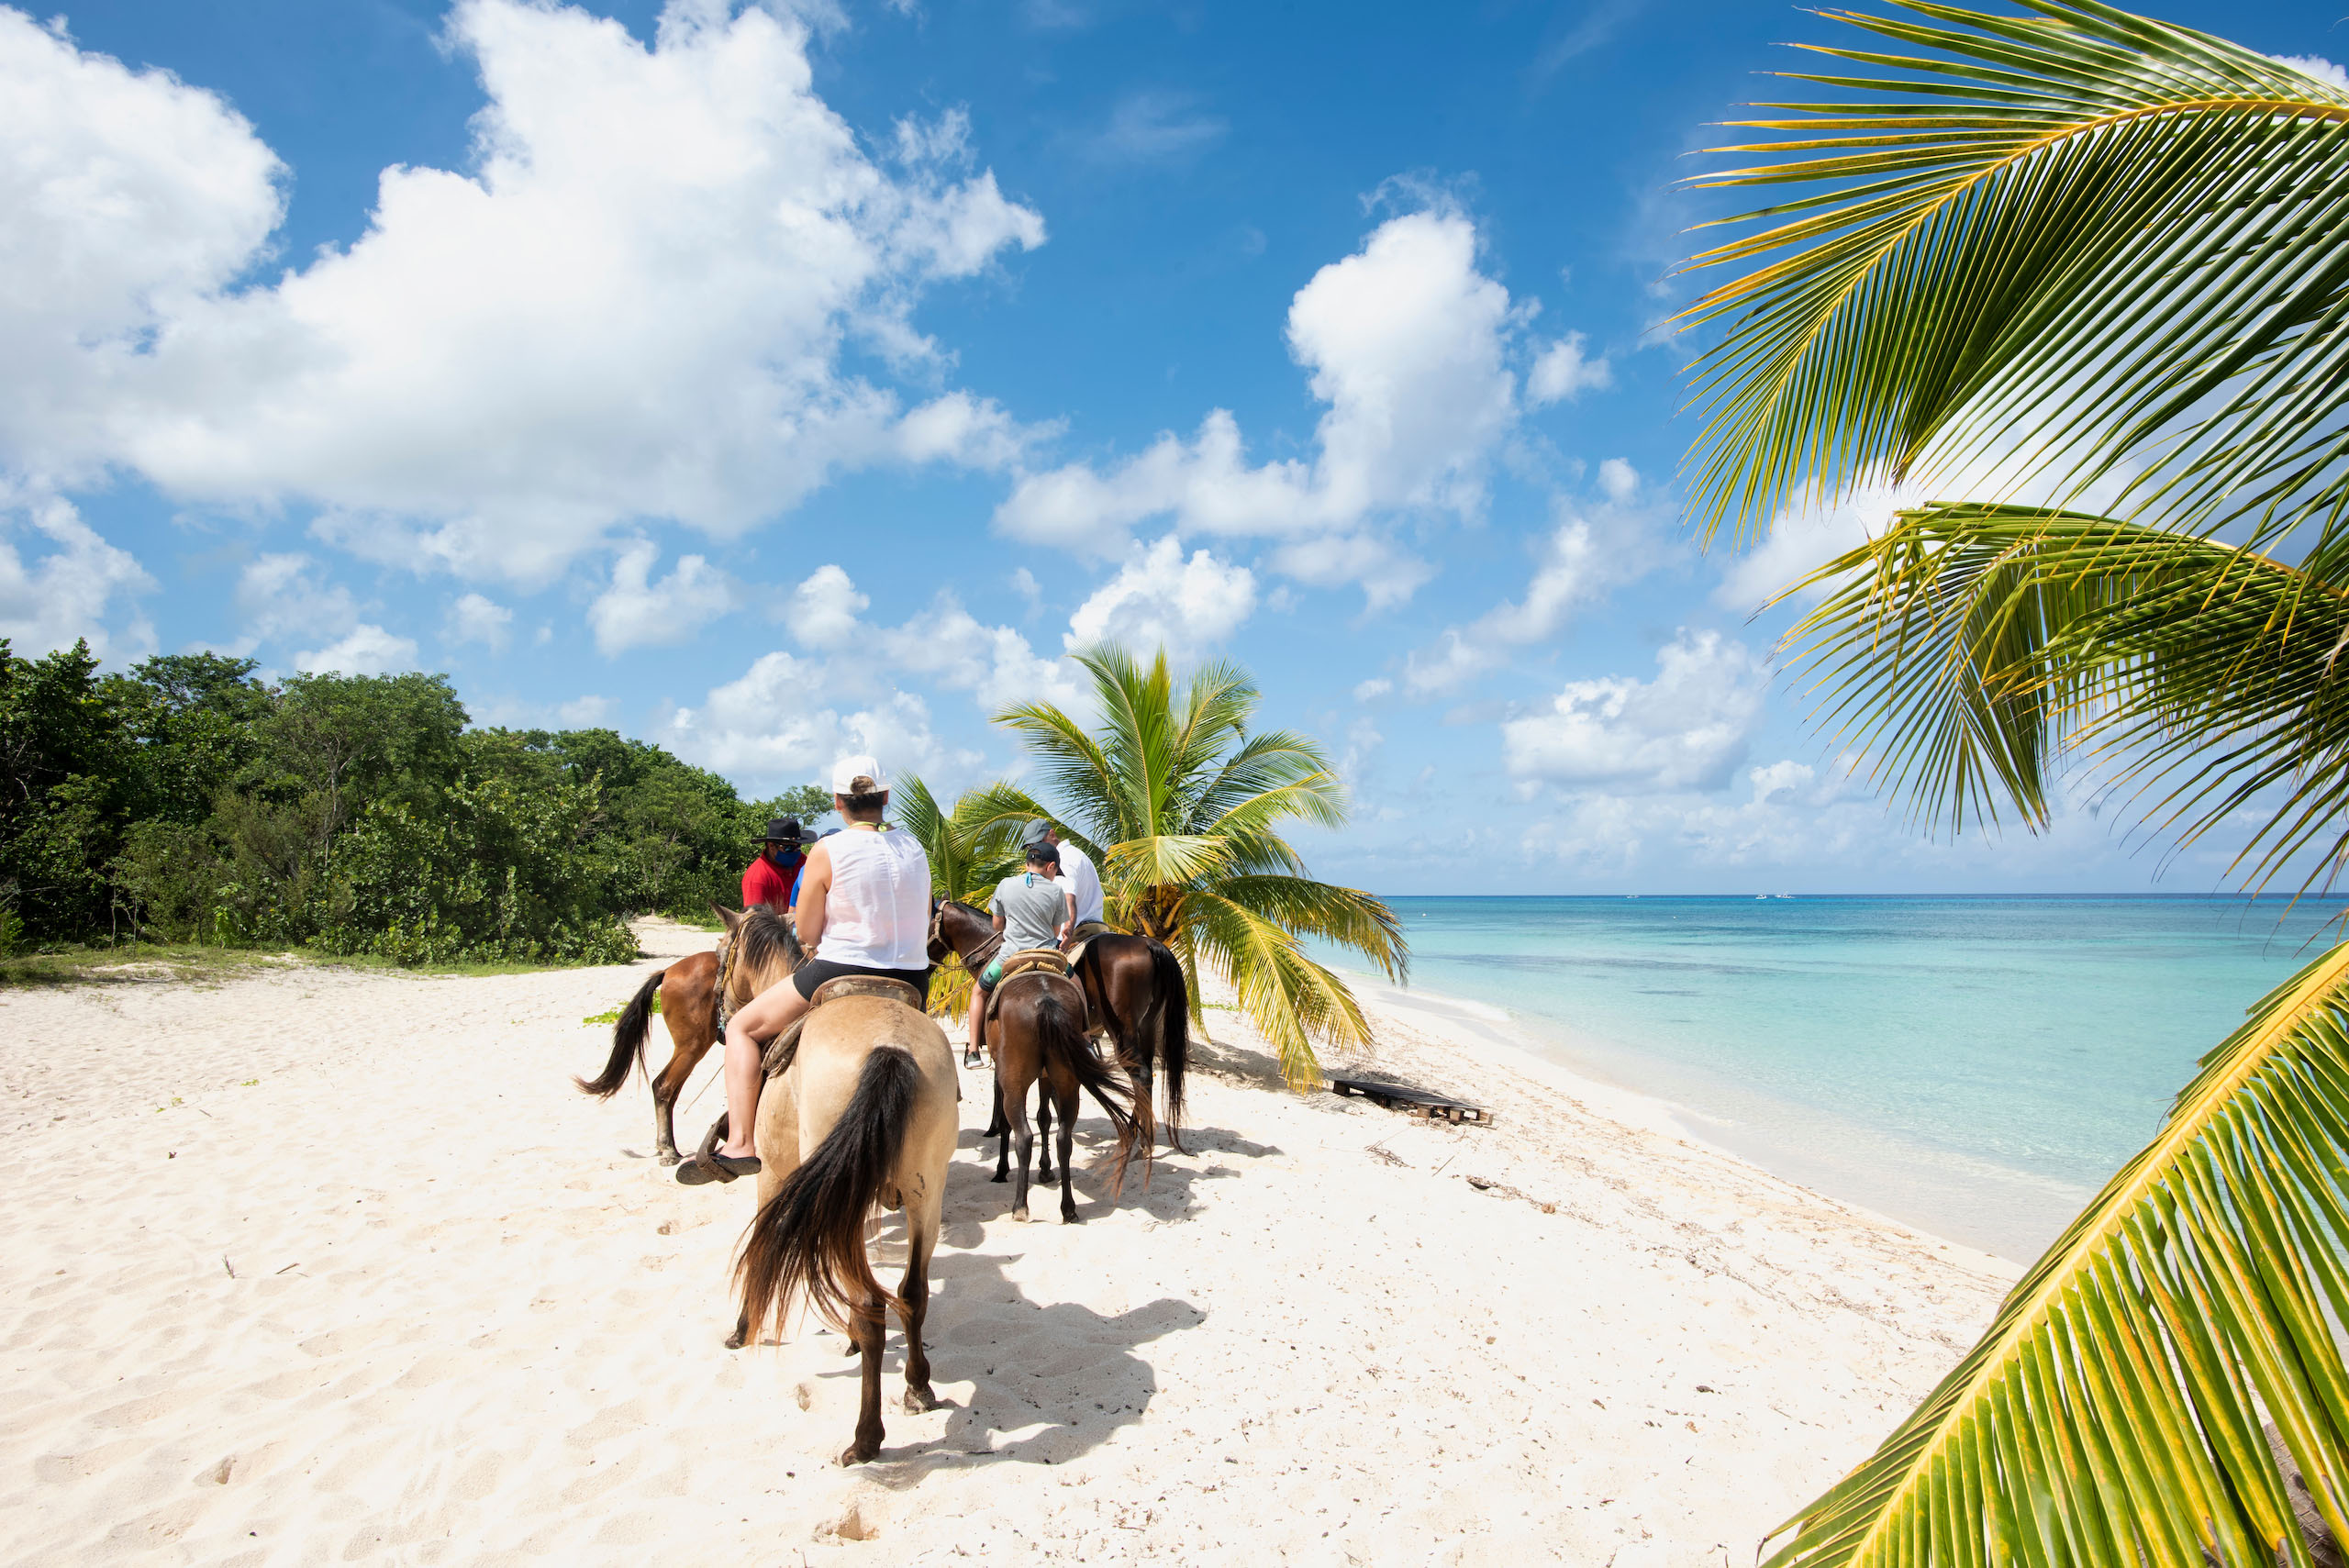 People on horseback in a tropical beach